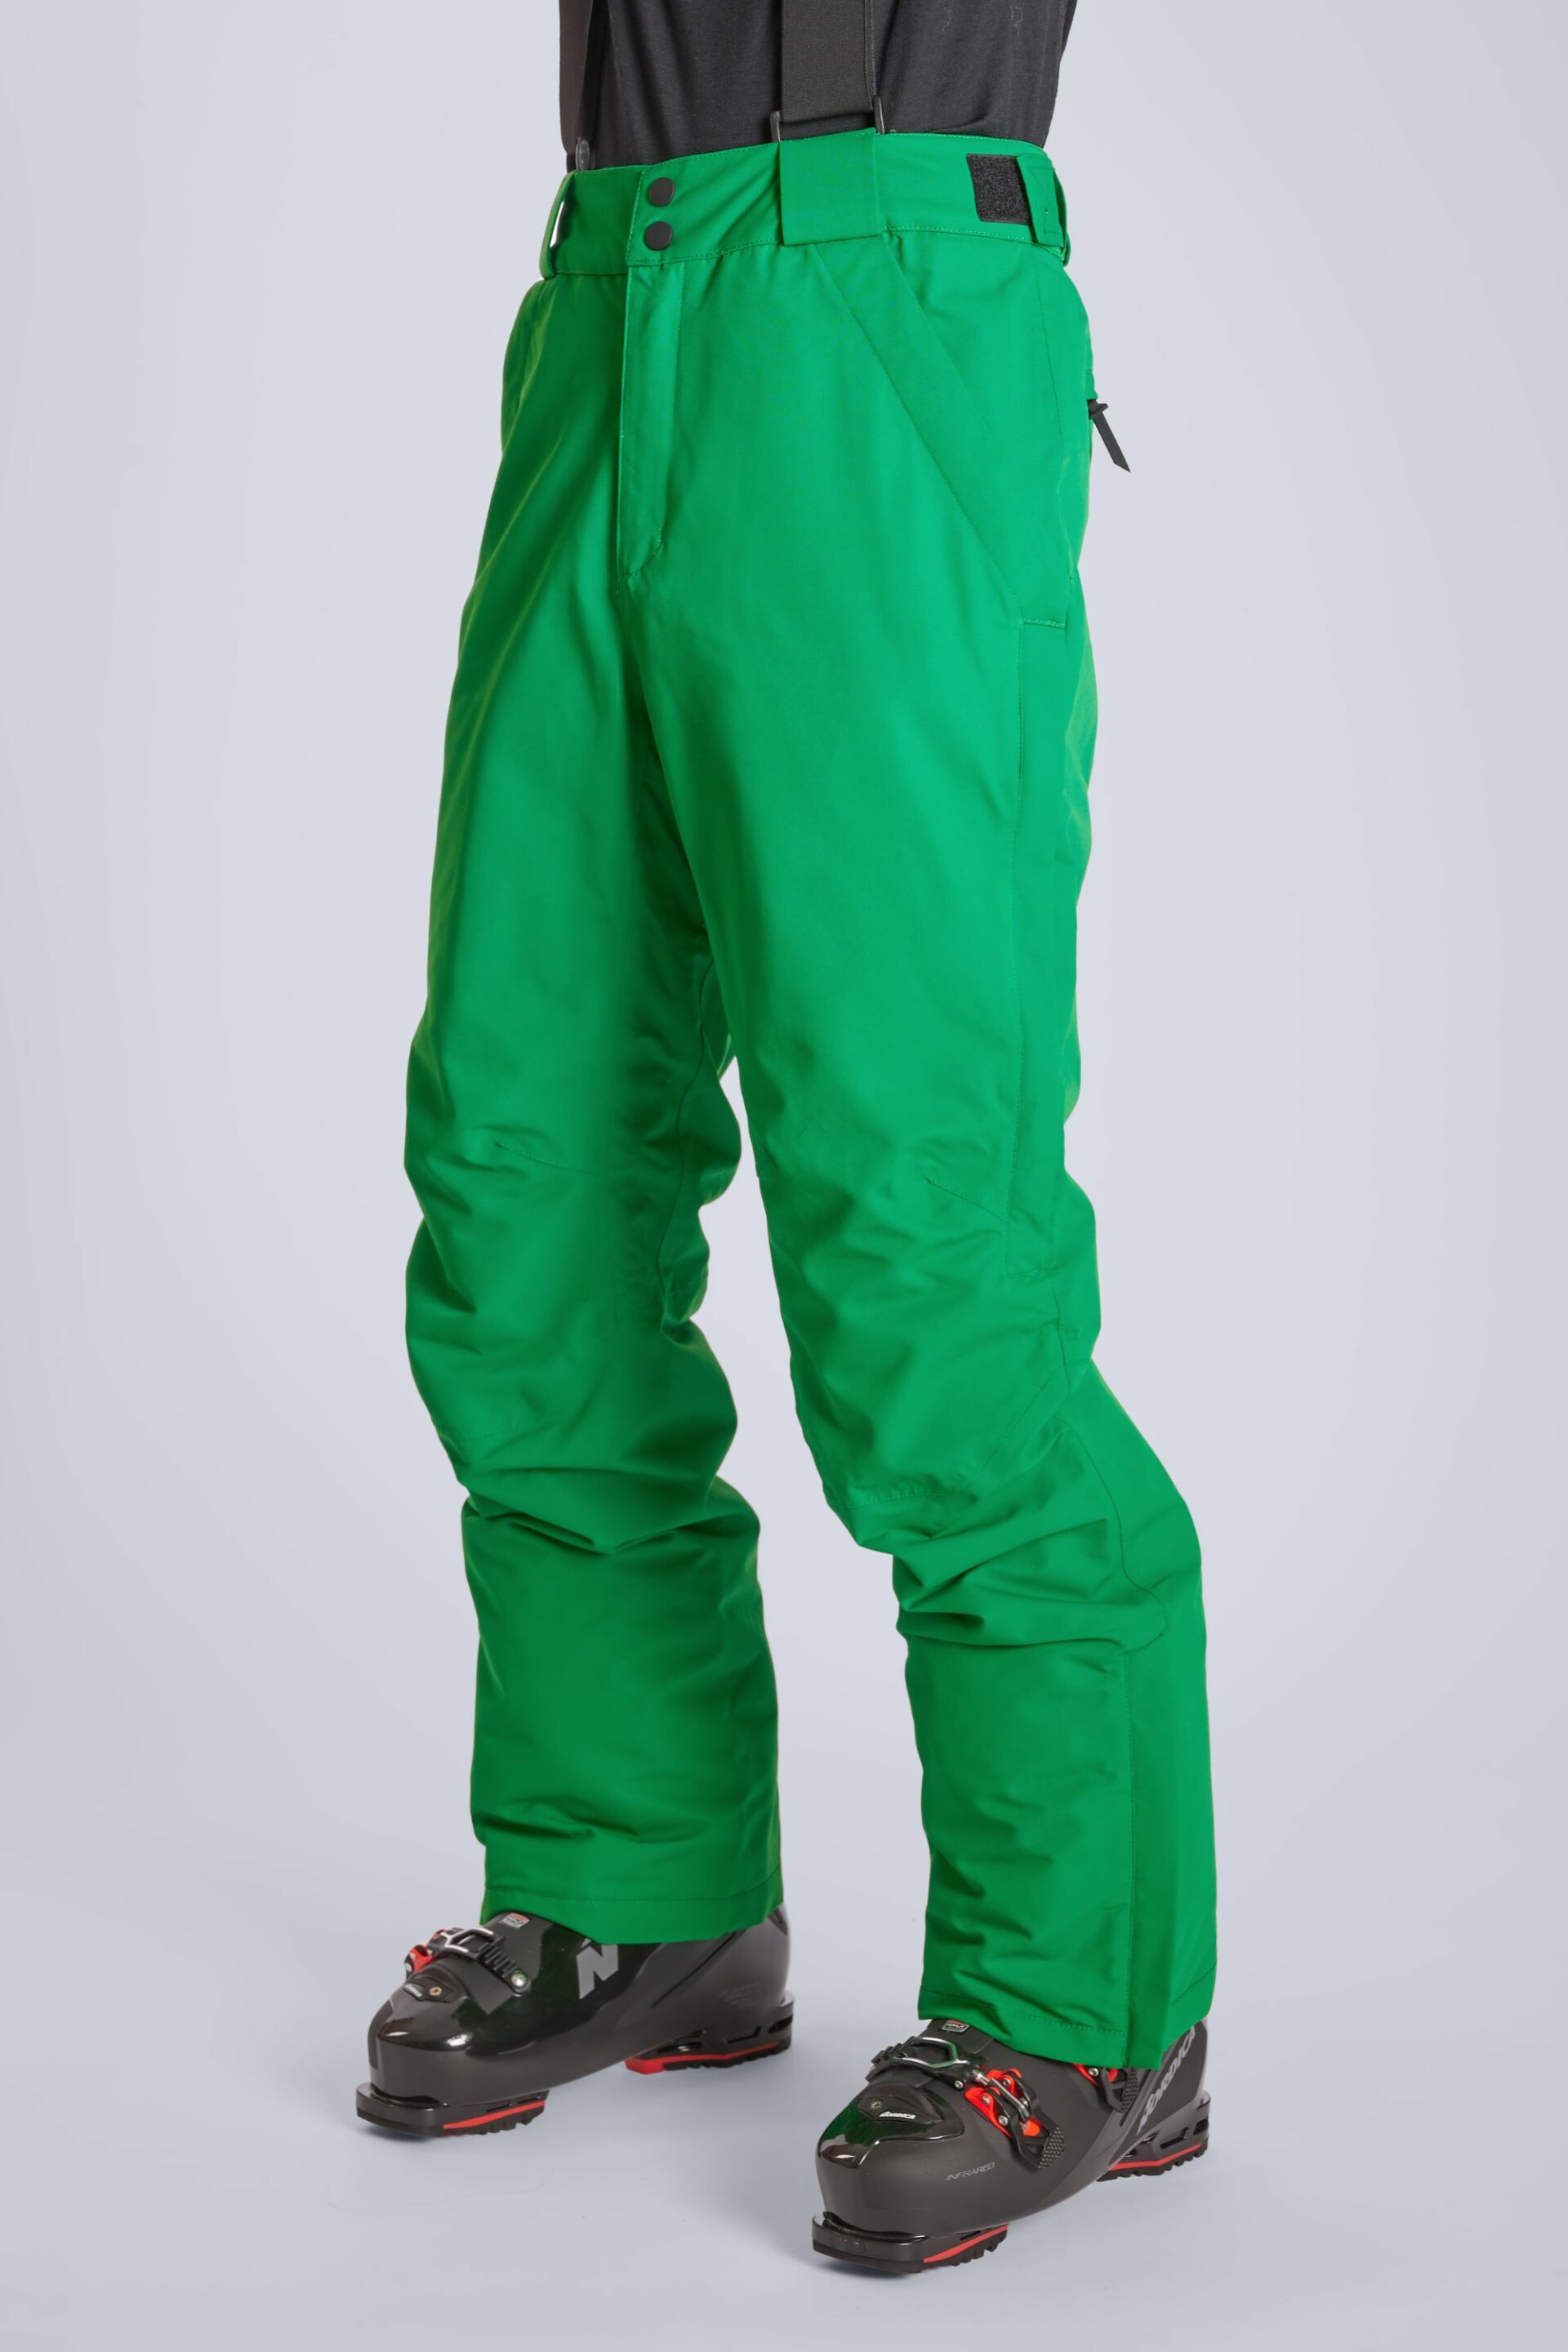 Renewed - Terra Ski Pants Kelly Green - Medium - Women's